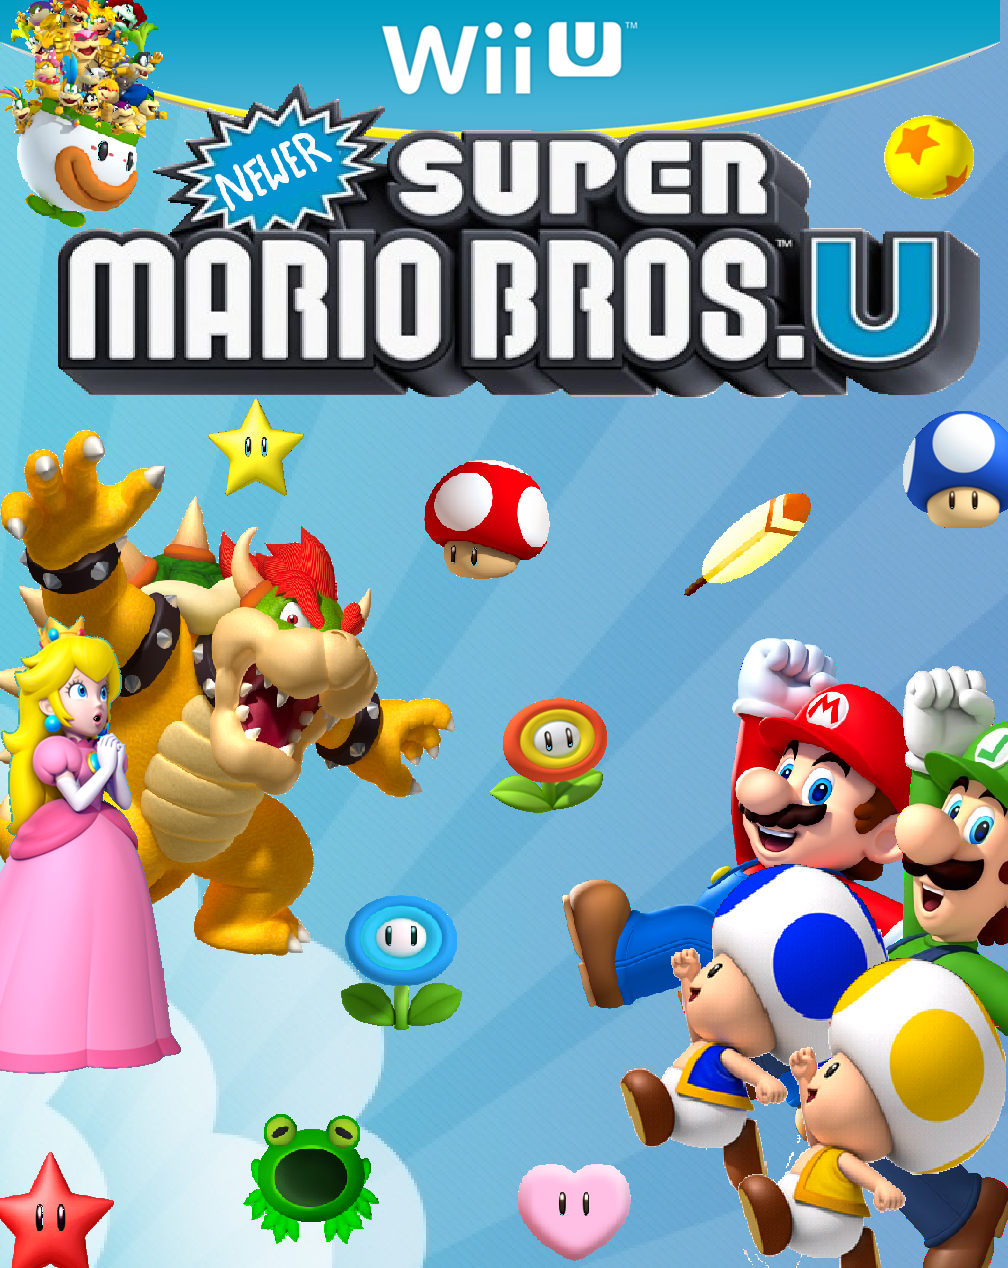 Newer Super Mario Bros. U, Newer Super Mario Bros. Wiki